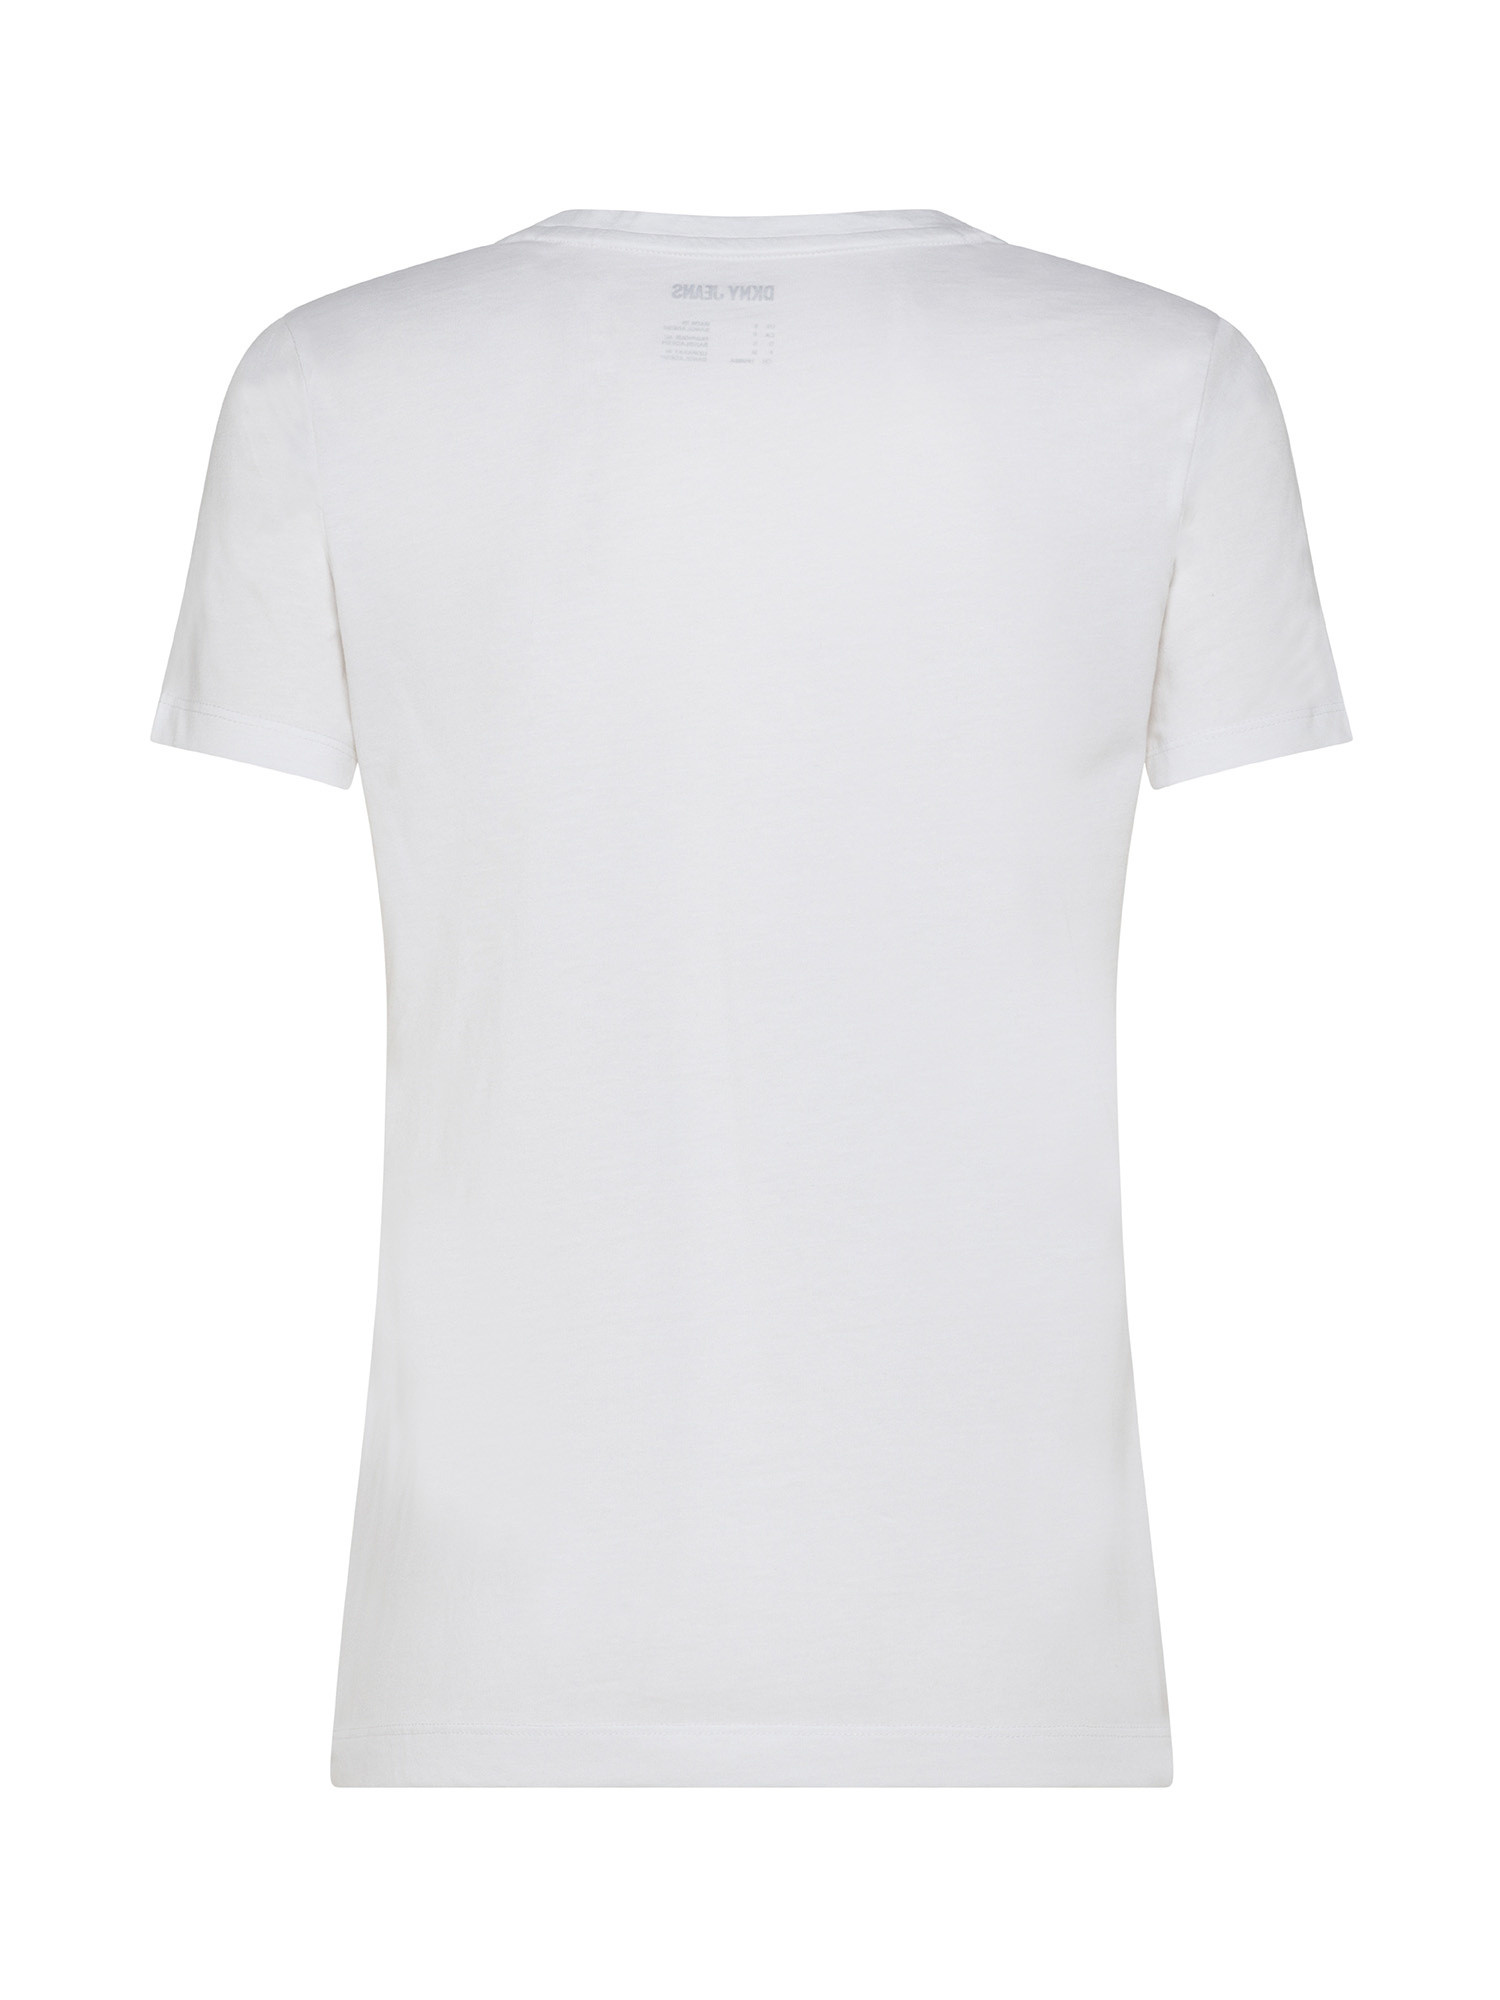 DKNY - T-shirt con logo, Bianco, large image number 1